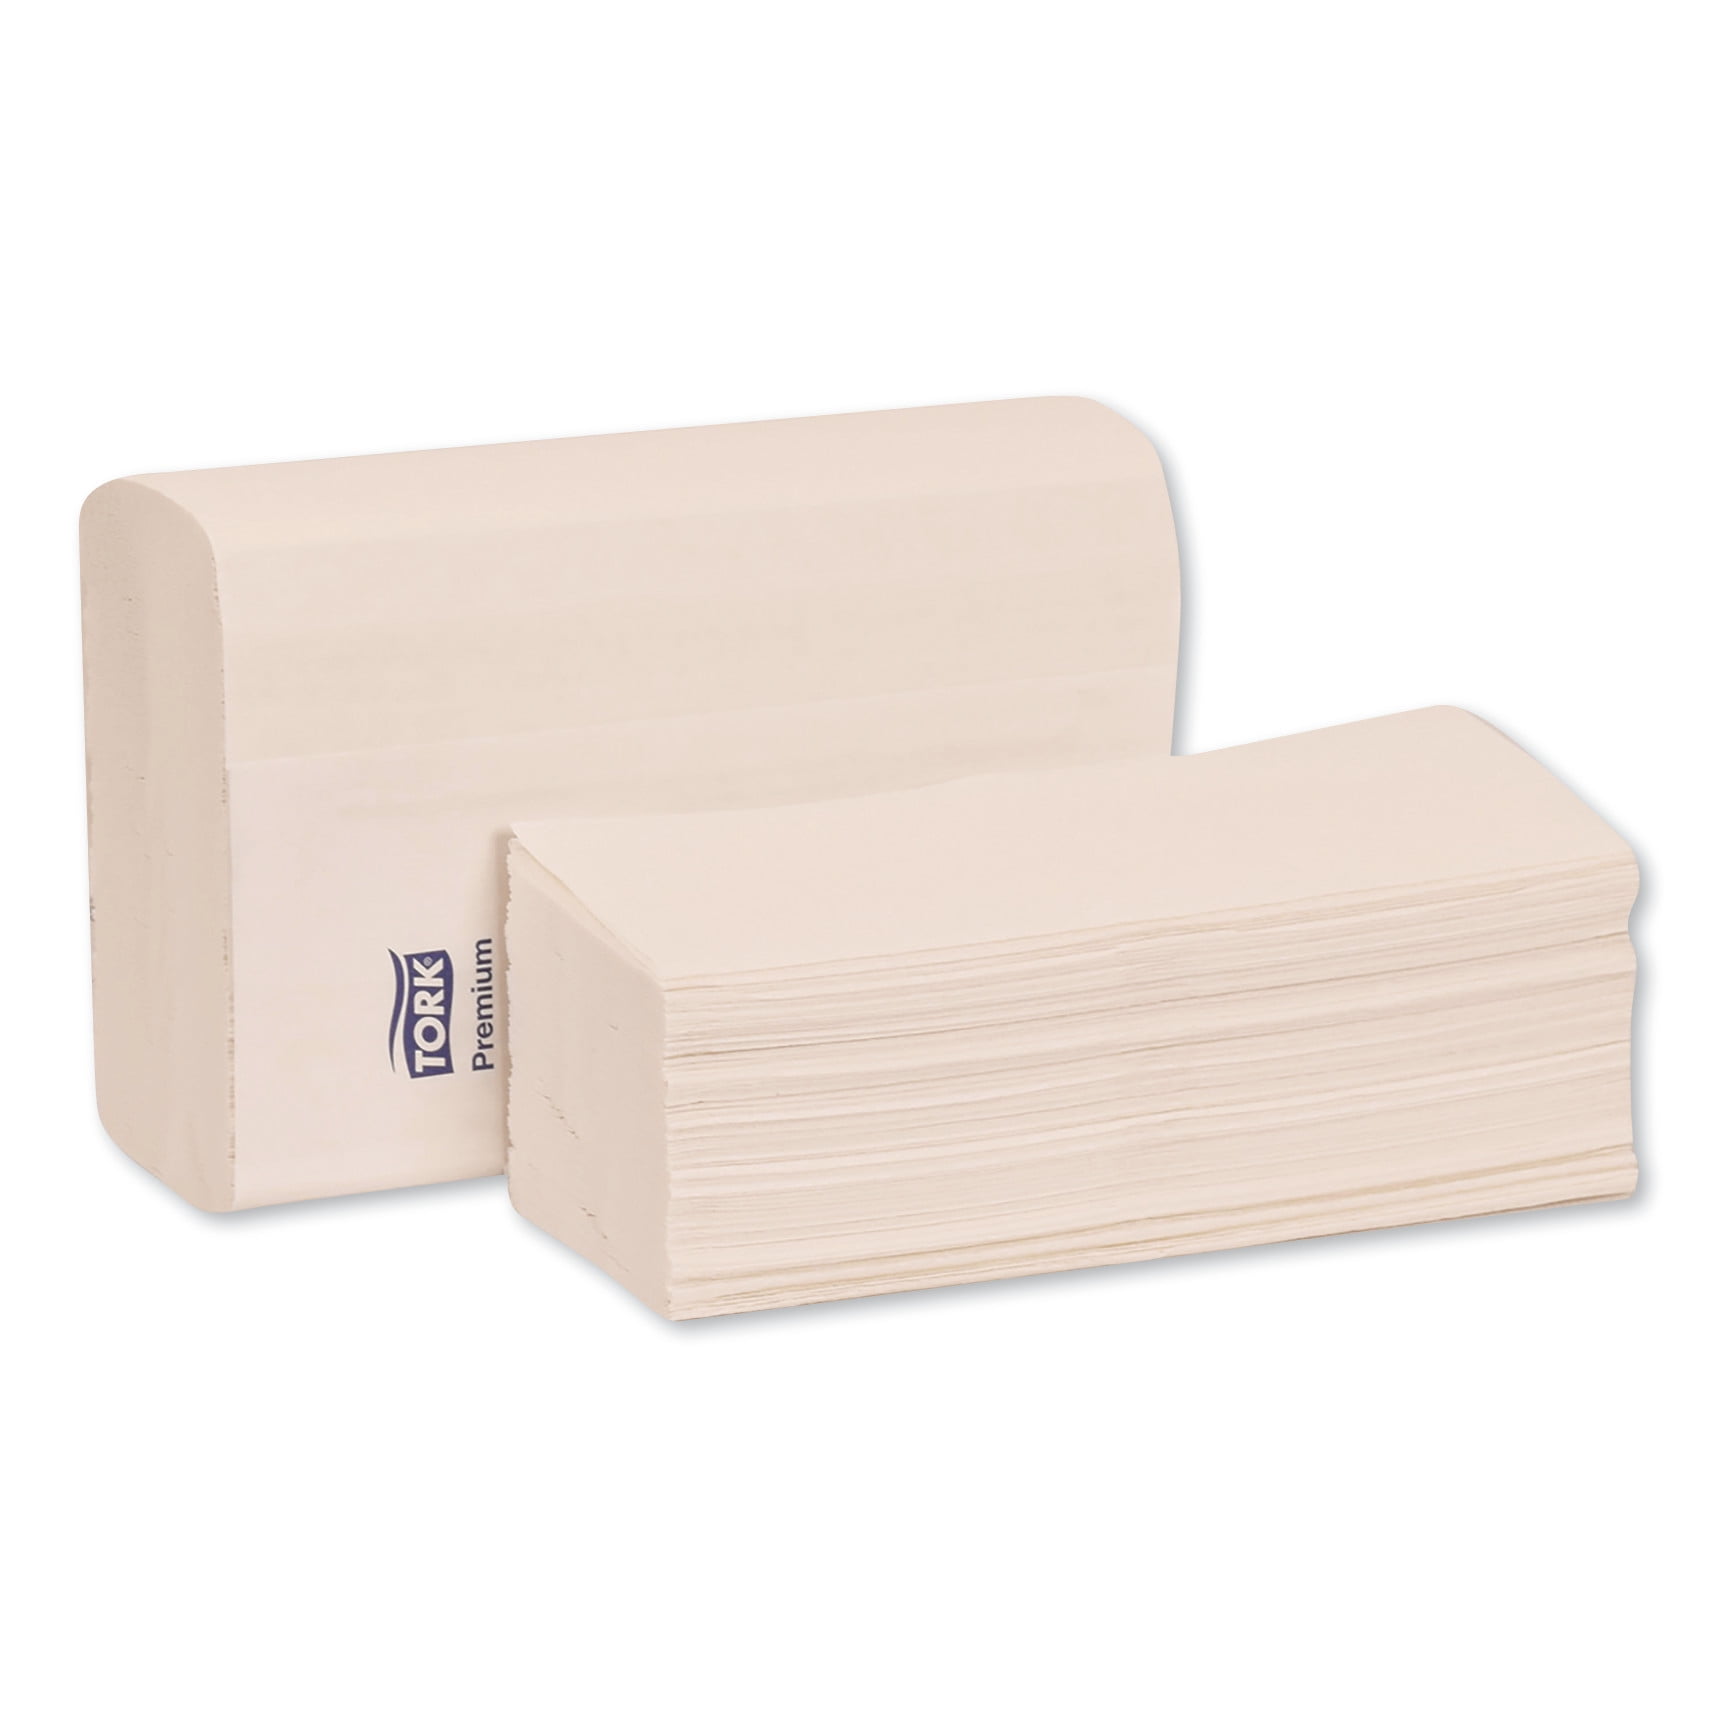 250/Pack,16 Packs/Carton White Universal Multifold Hand Towel 9.13 x 9.5